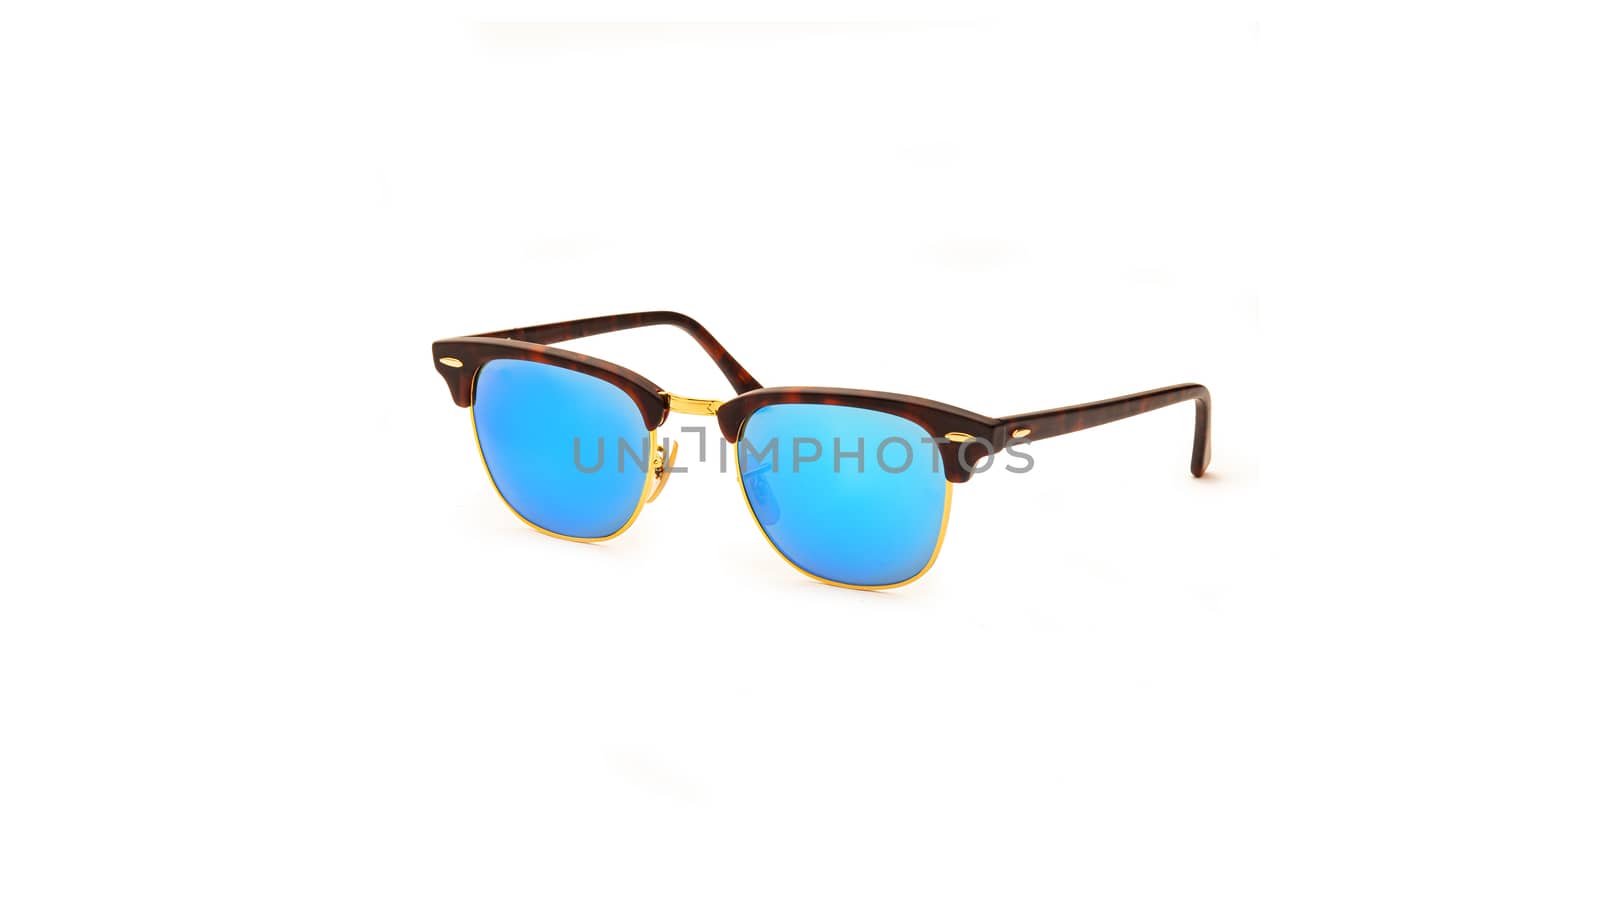 sunglasses online shop white background fashion design glasses blue brown